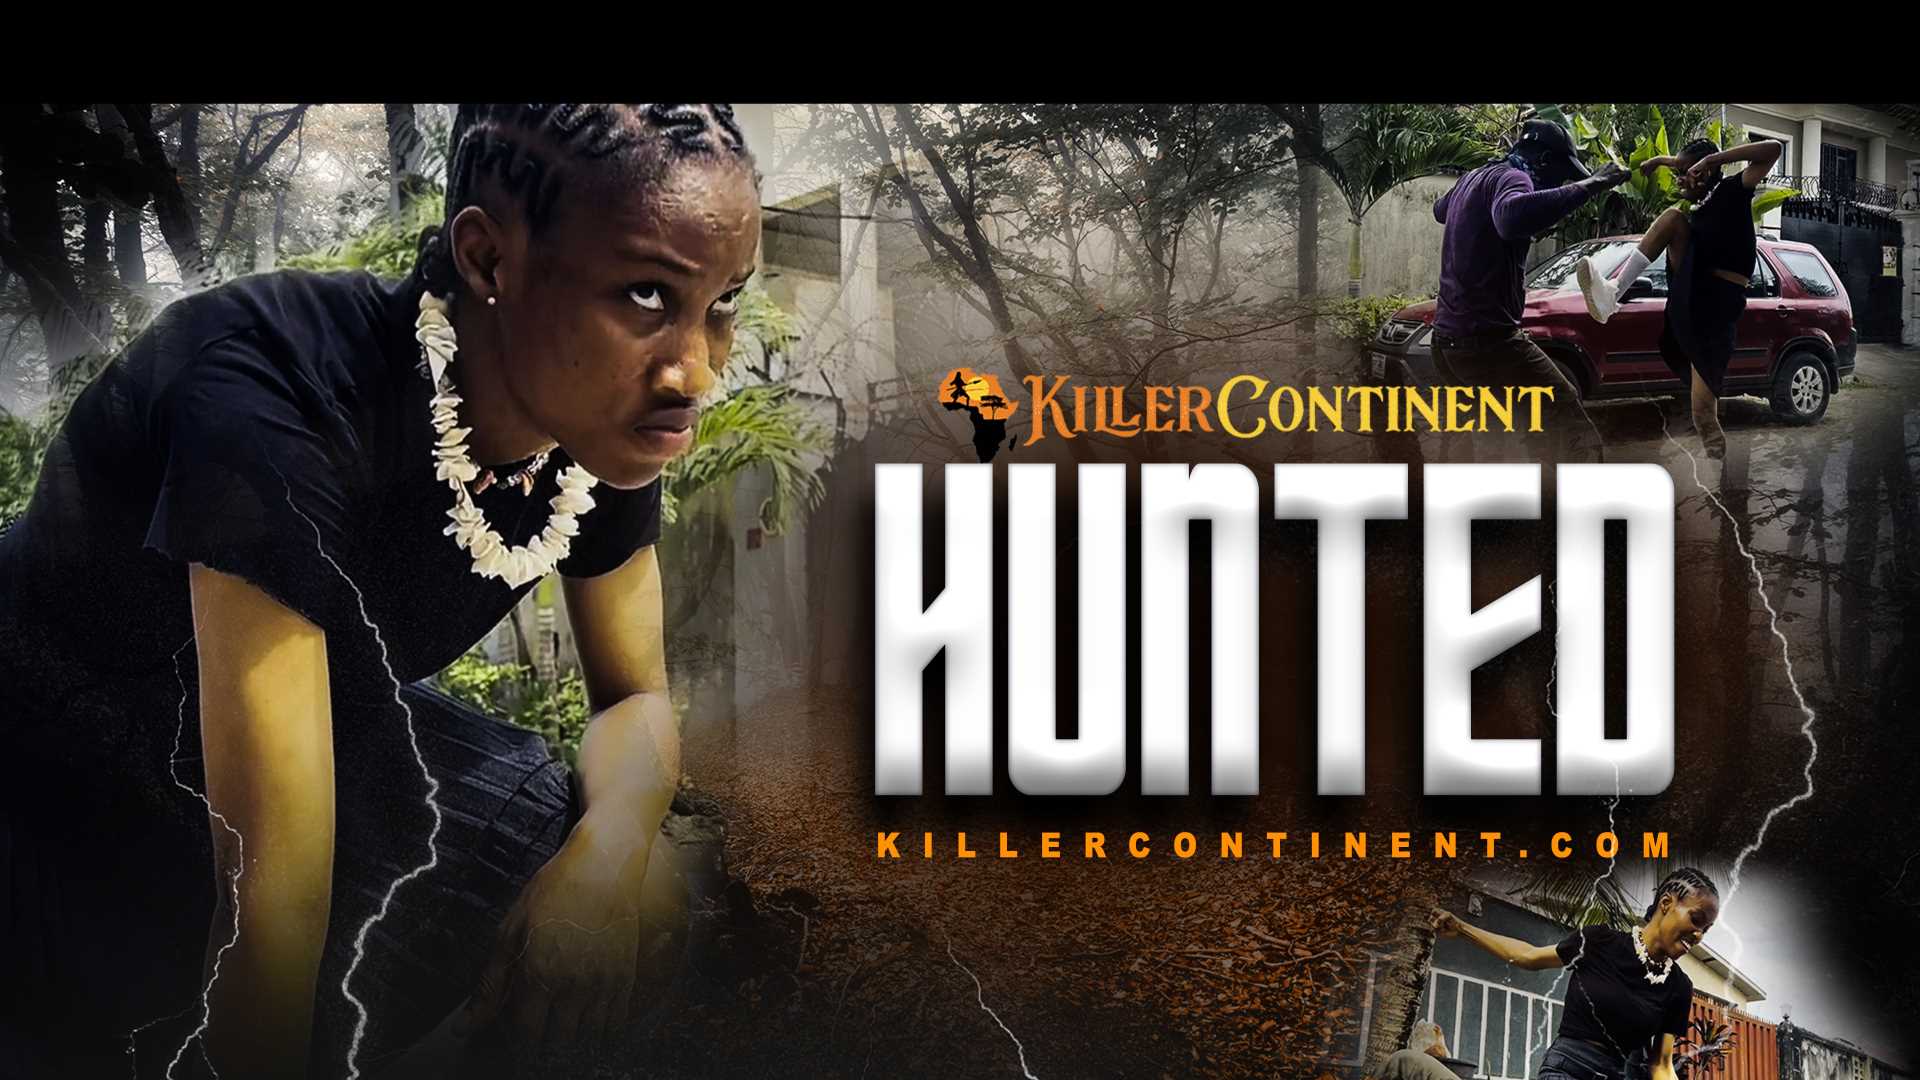 KillerContinent | Killer Continent | HUNTED